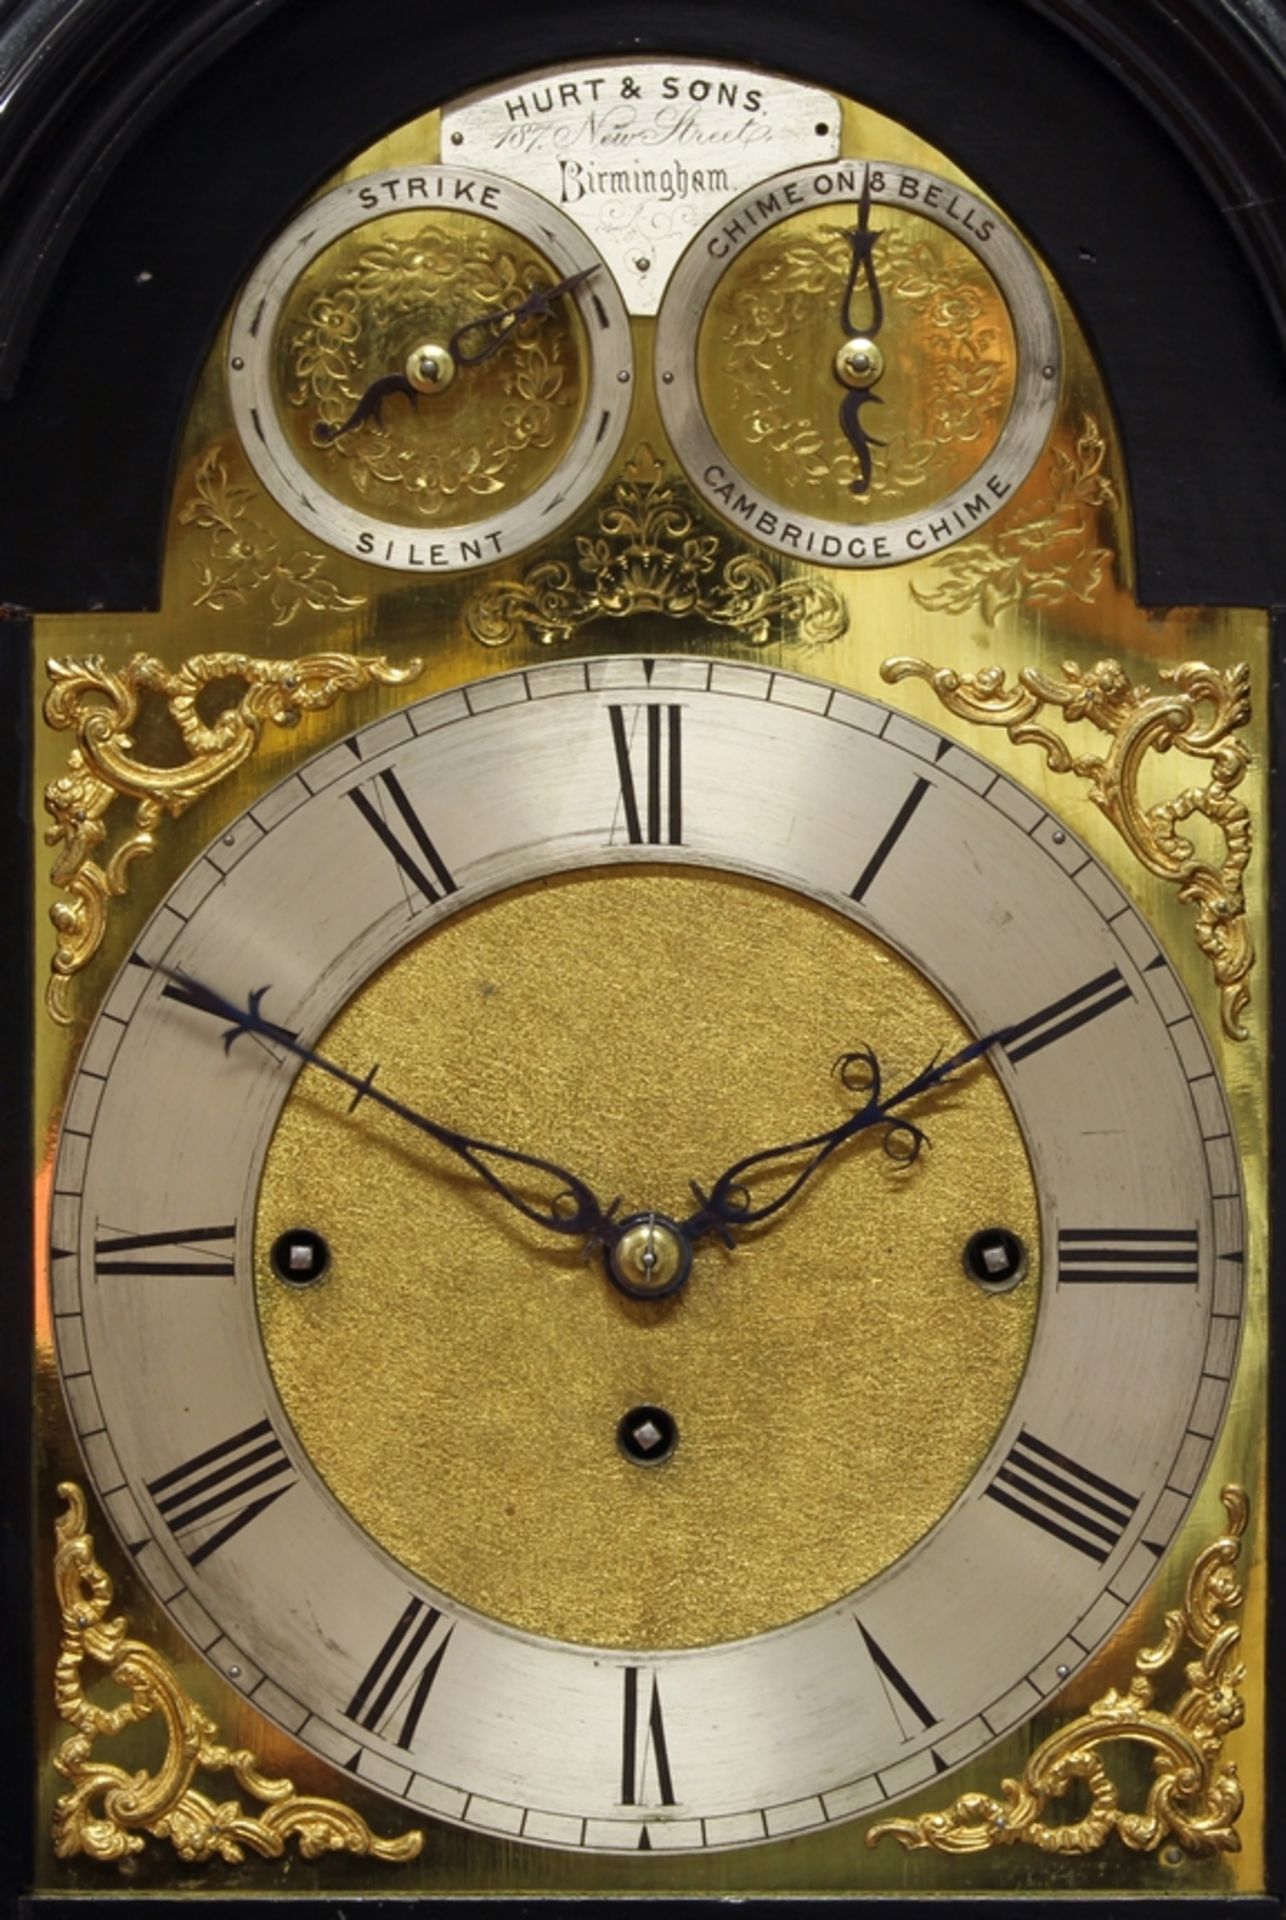 Bracket Clock, England, Mitte 19. Jh., signiert Hurt & Sons, 187 New Street, Birmingham, schwarzes - Image 2 of 6